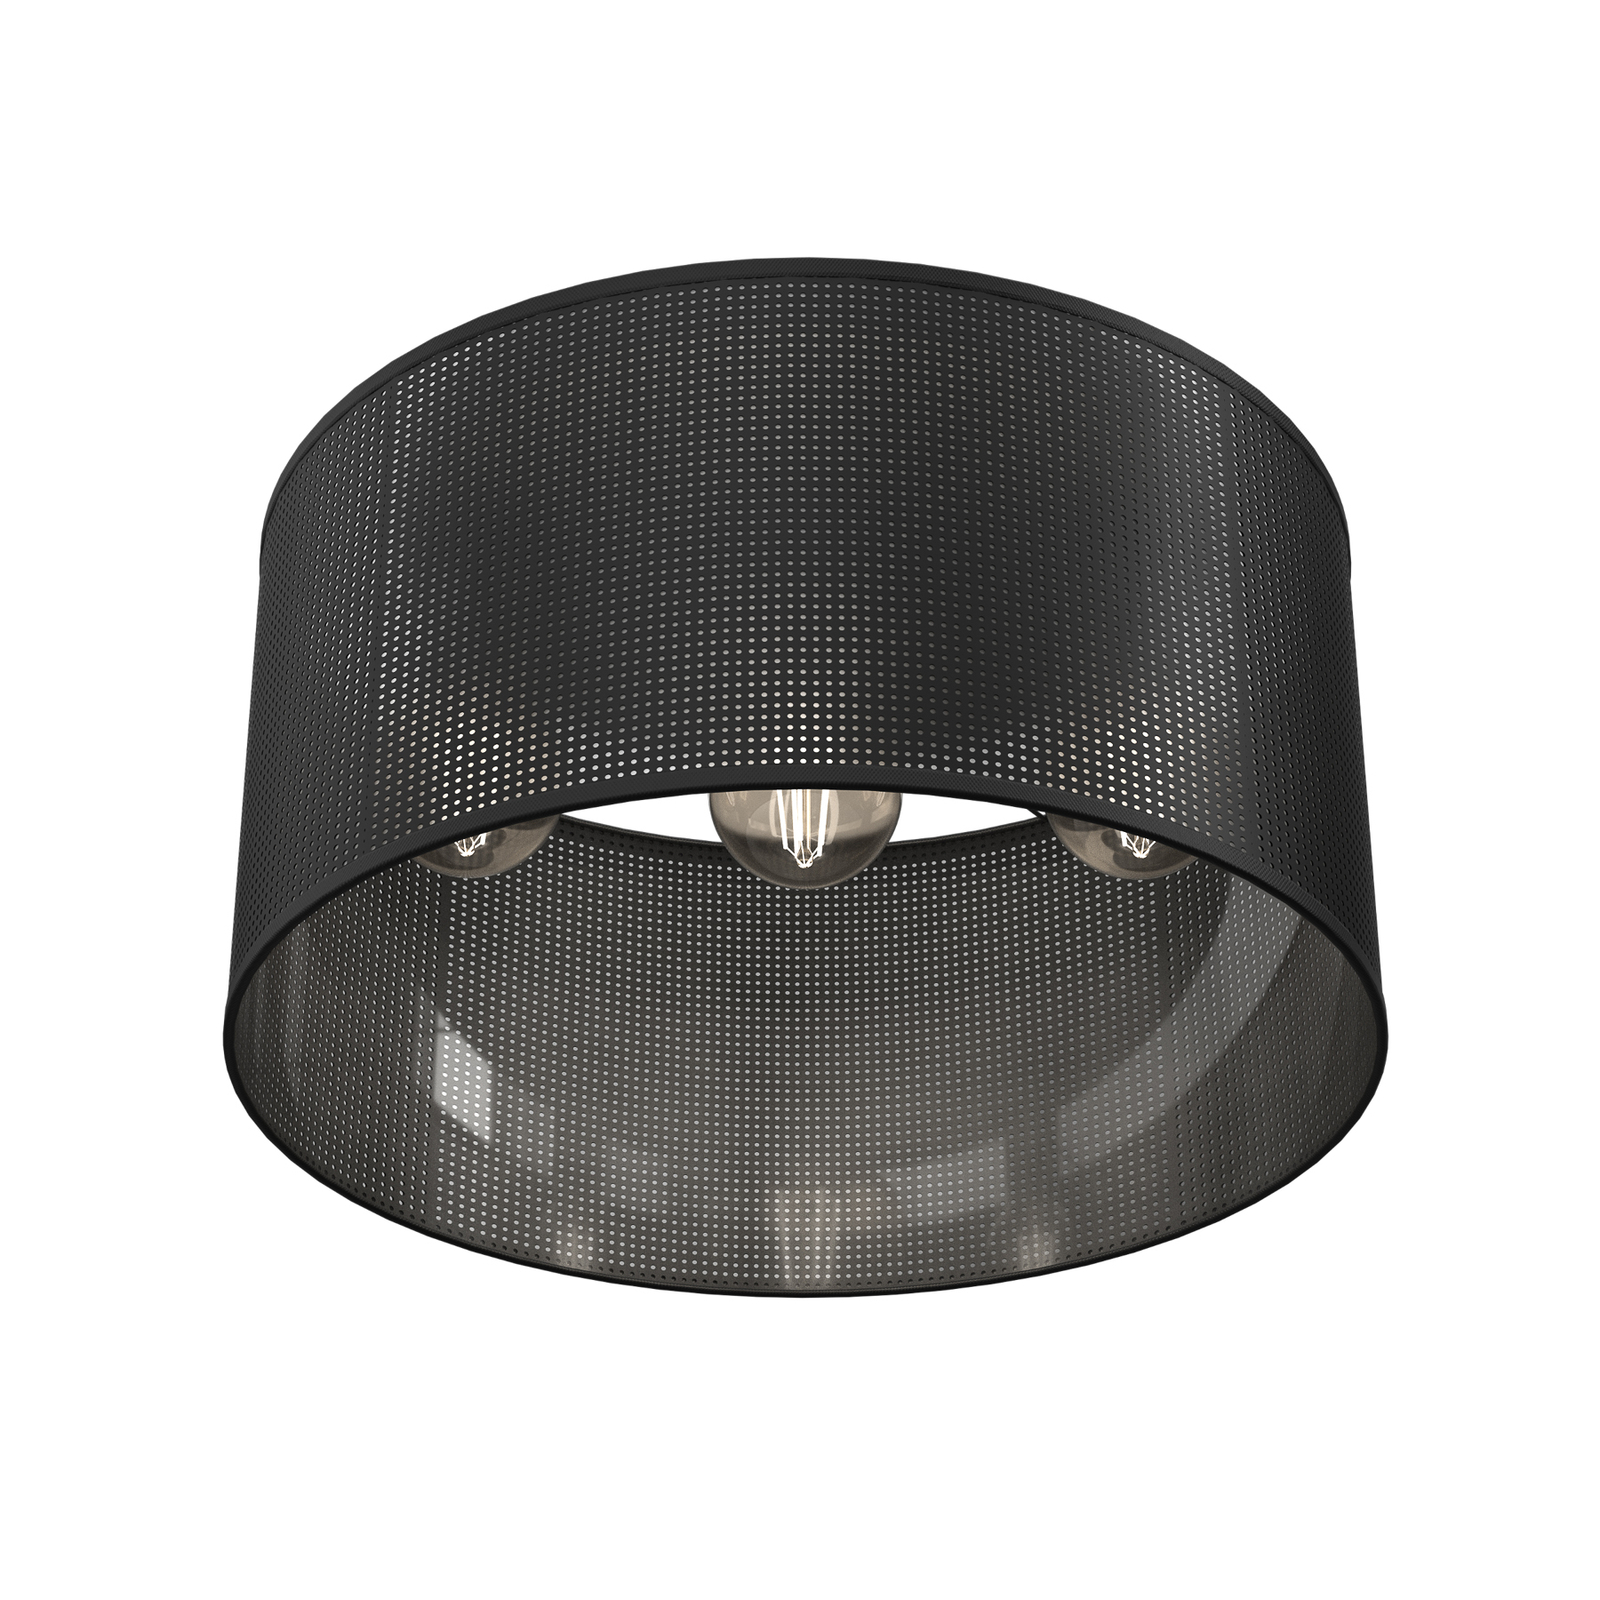 Jovin ceiling light, 3-bulb, one lampshade, black